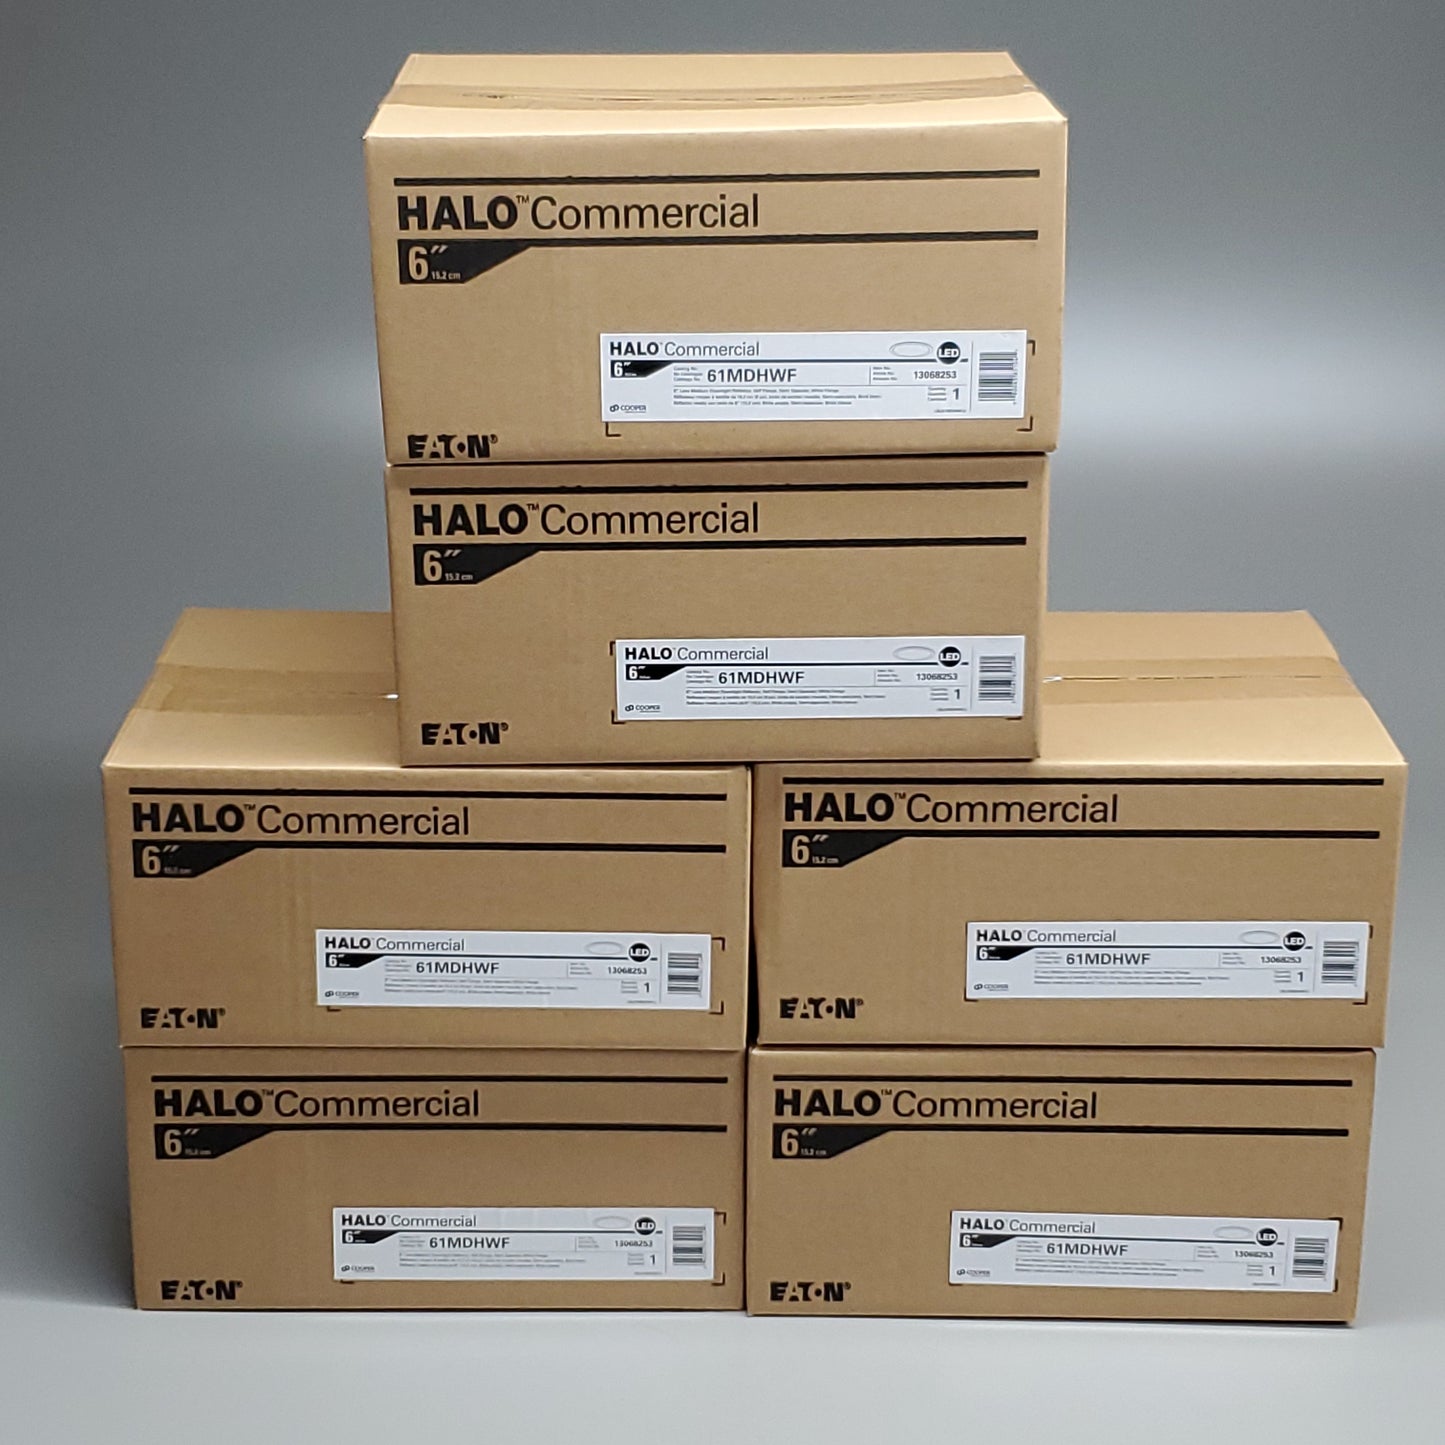 ZA@ HALO Commercial 6PK Lighting Lense & Reflector Trims 6" White HC6 64MDHWF (New)